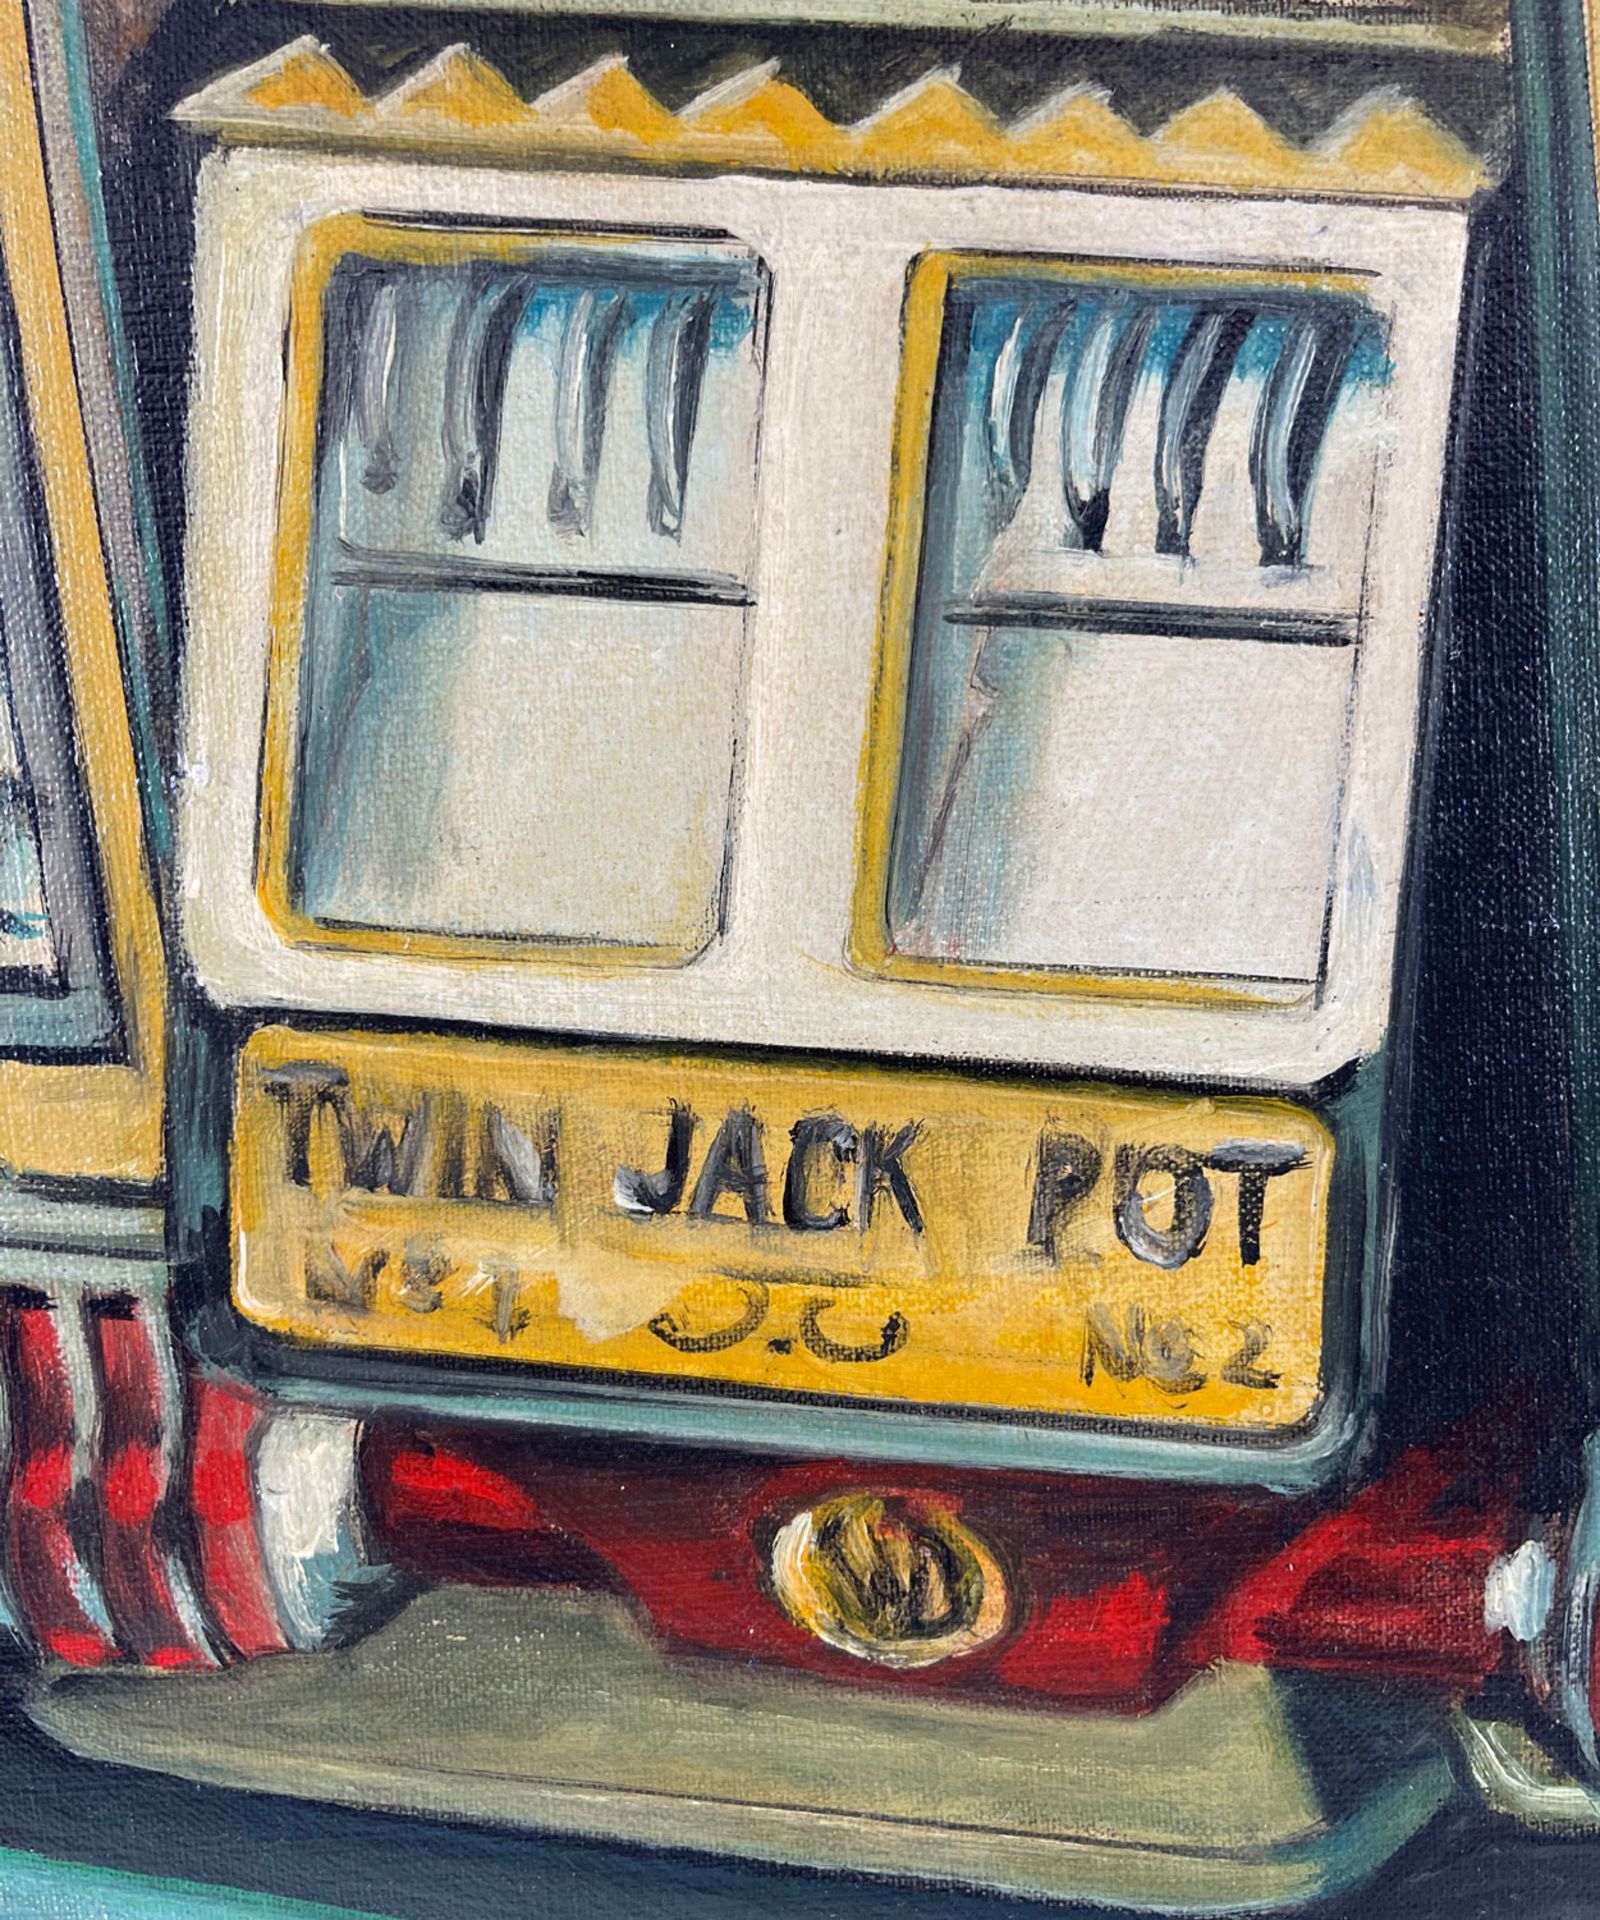 Framed J. Krivine Painting of Watling Rol-A-Top Slot Machine - Image 3 of 5